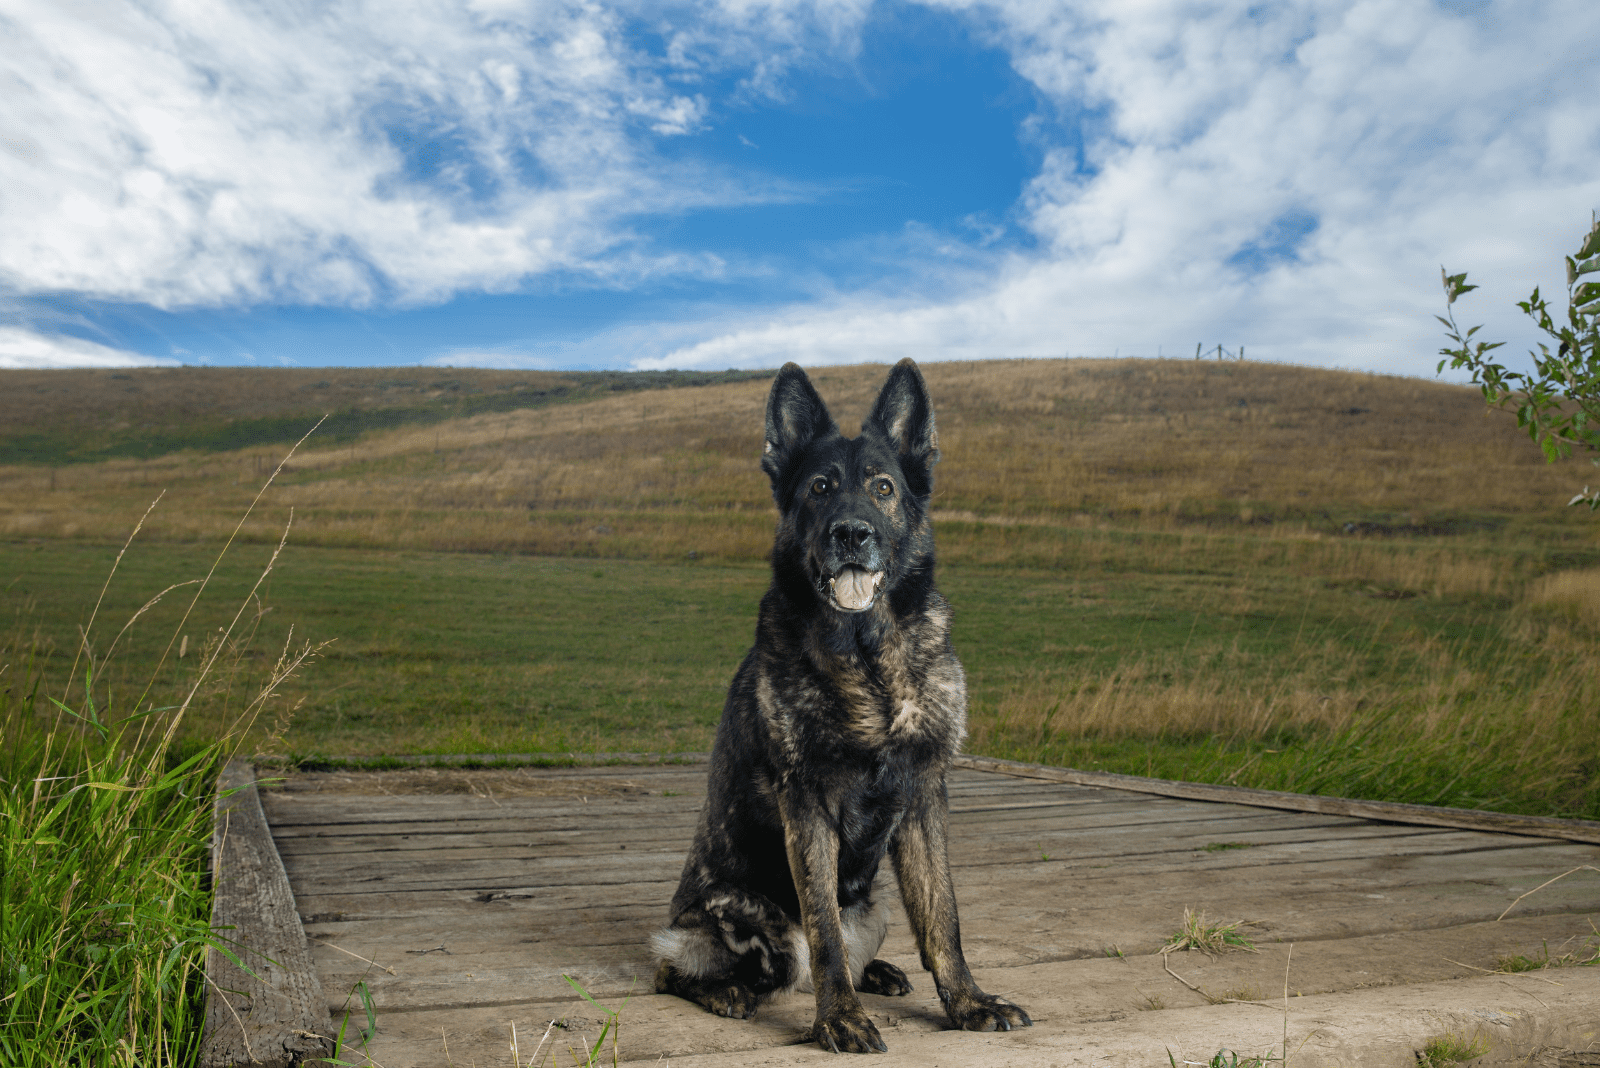 Sable German Shepherd sitting on a wooden base